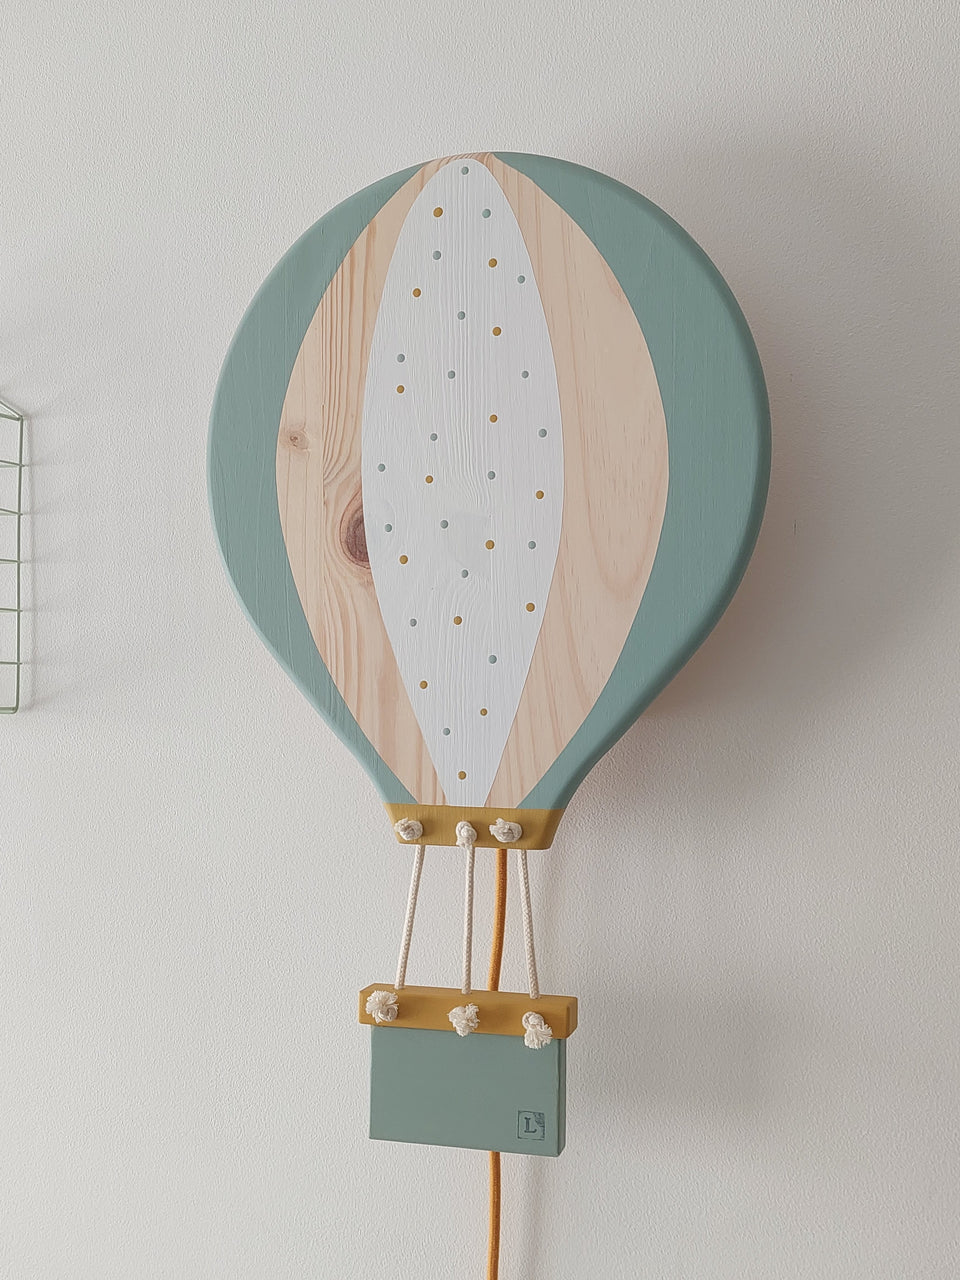 Candeeiro parede Balão Ar Quente Trend - Trend Hot Air Balloon Wall Lamp